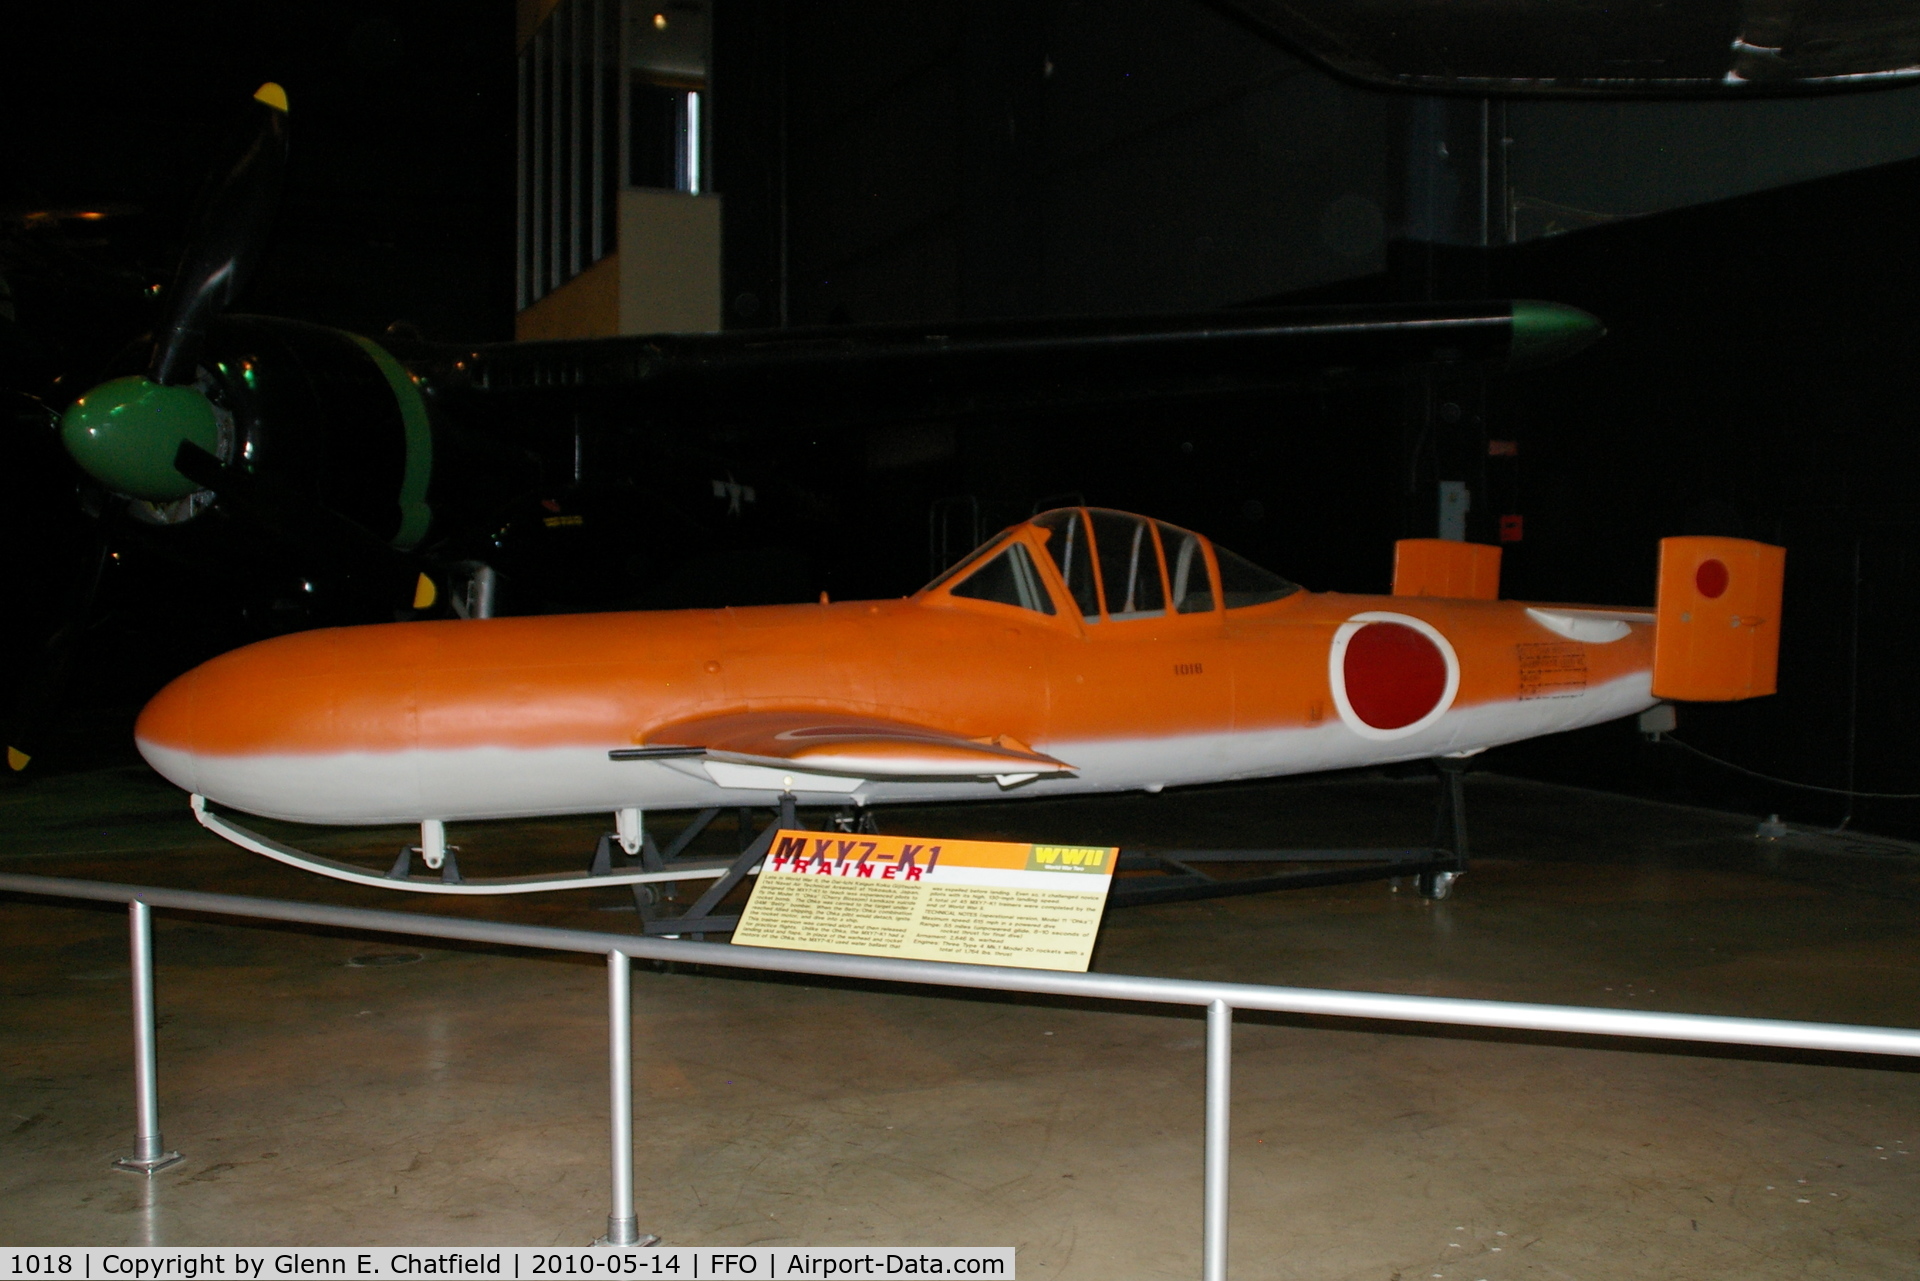 1018, 1945 Yokosuka MXY7-K1 Ohka II C/N Not found 1018, MXY-7 Type 43 K-1 Ohka Trainer.  At the National Museum of the USAF